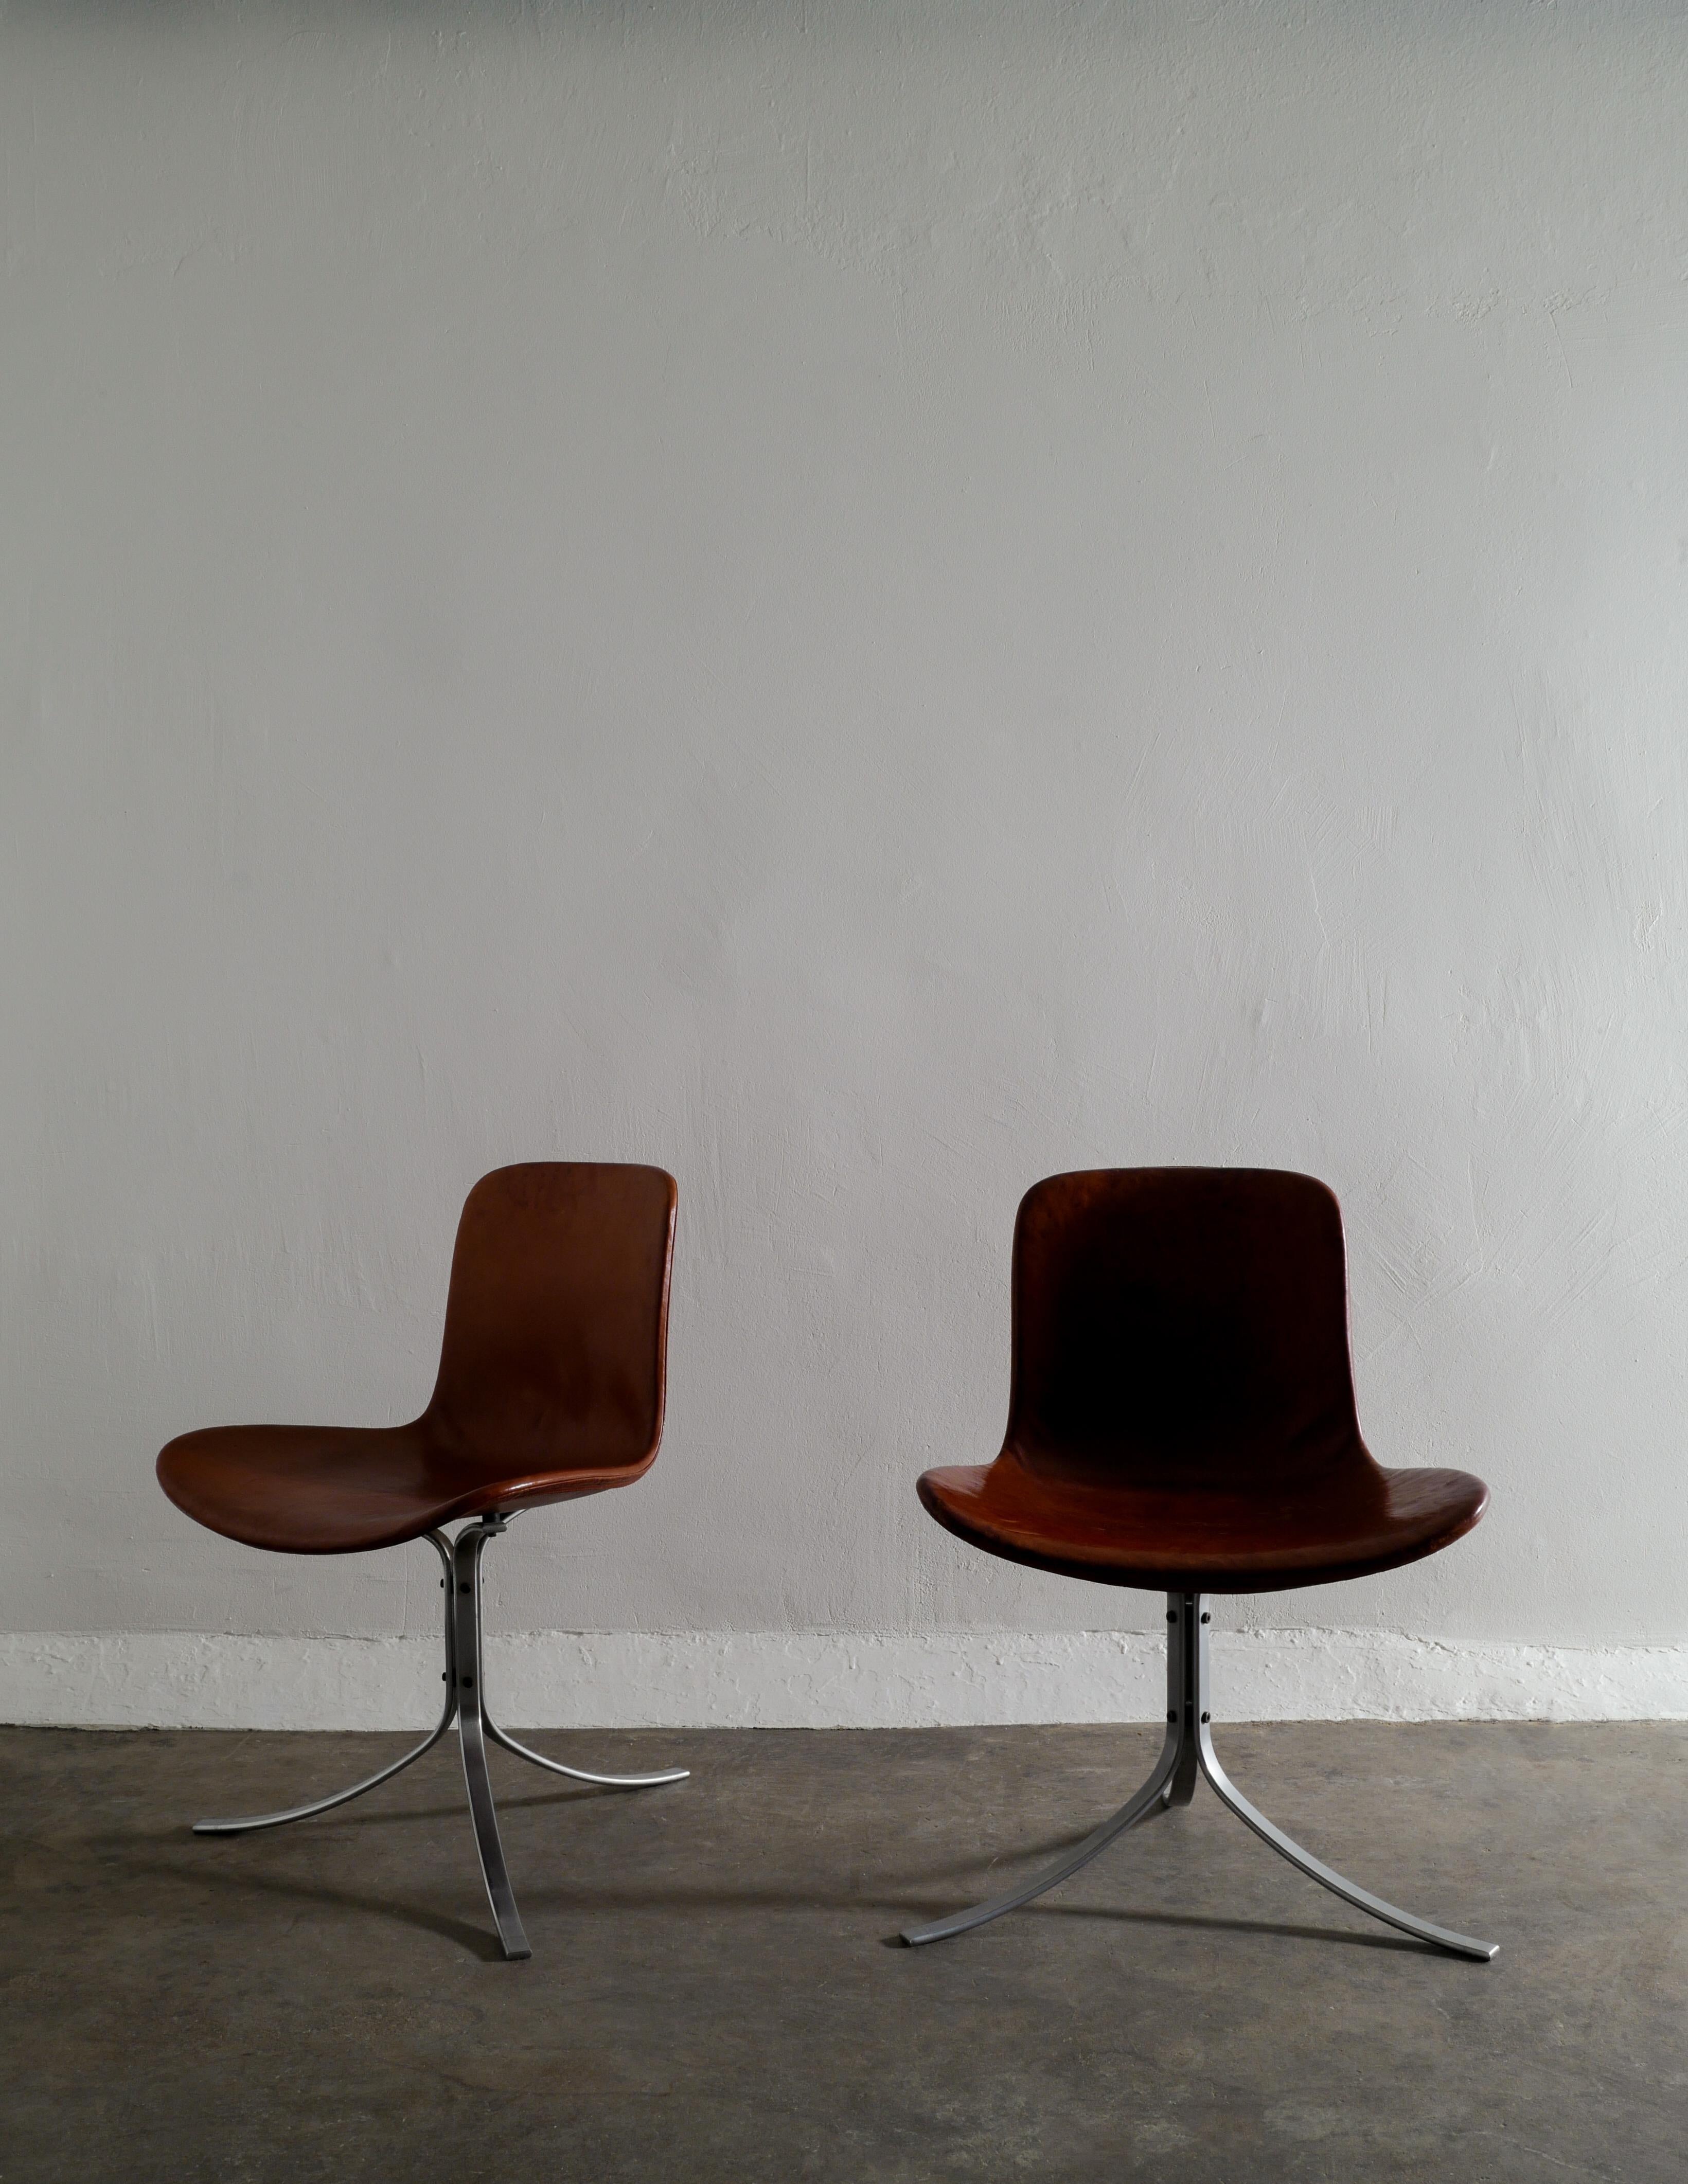 Scandinavian Modern Poul Kjaerholm PK-9 Dining Chairs Produced by E. Kold Christensen, Denmark 1960s